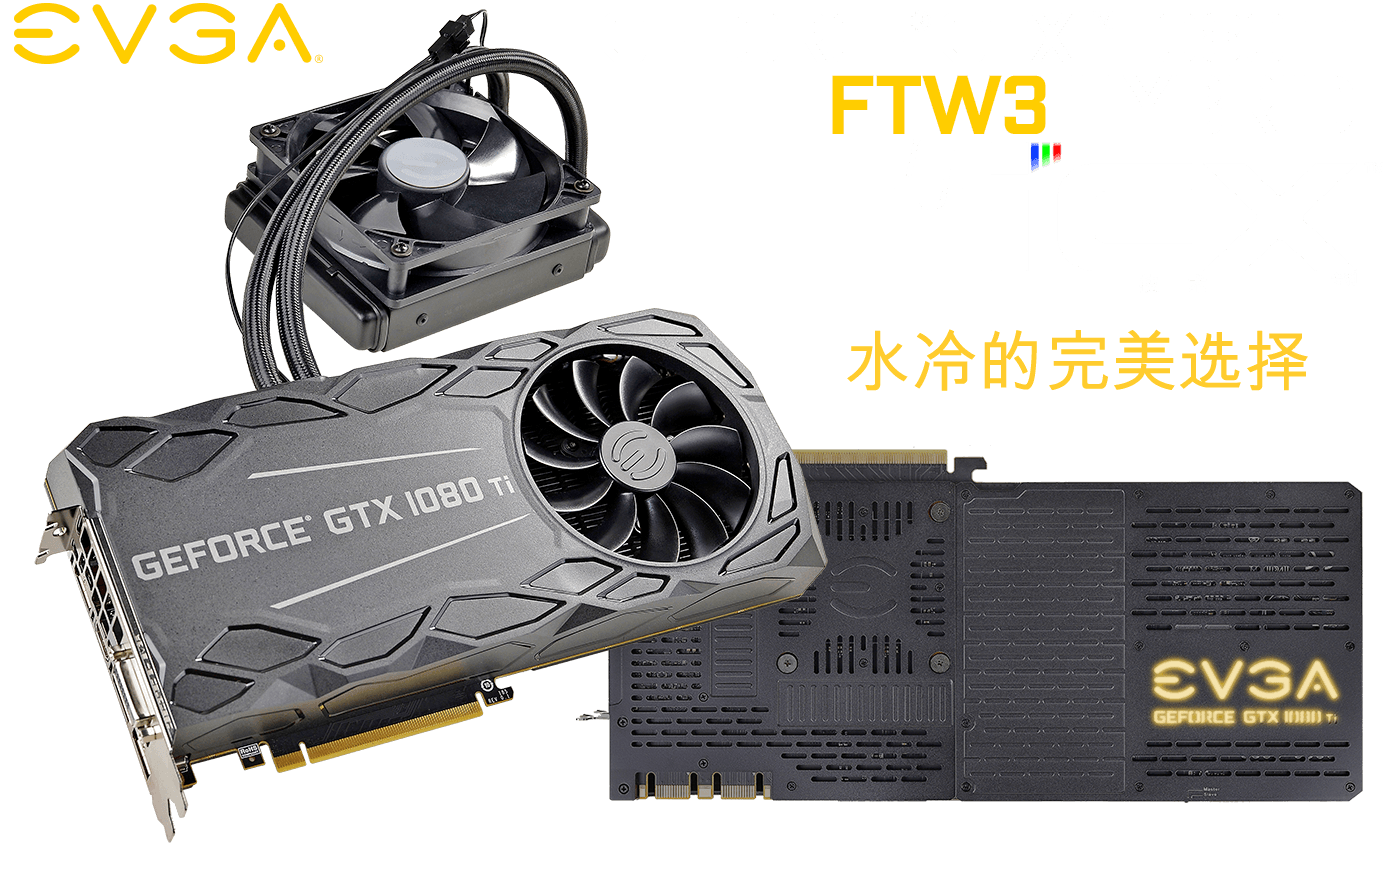 EVGA GeForce GTX 1080 Ti FTW3 HYBRID